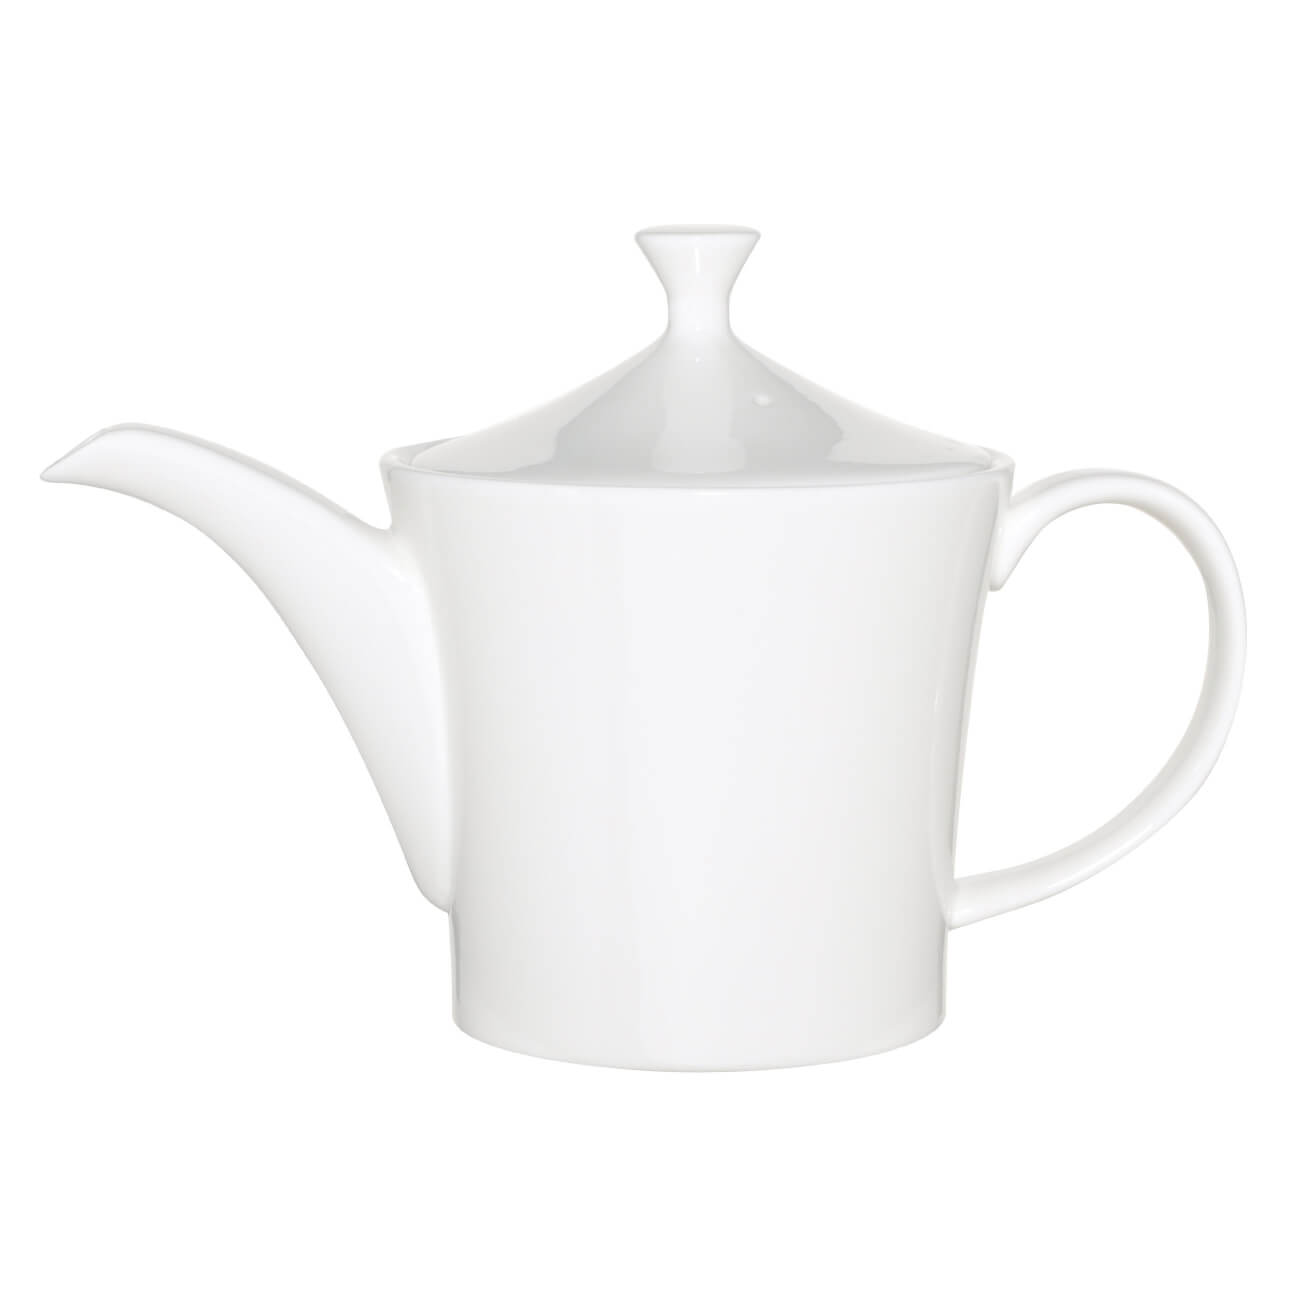 Чайник заварочный, 800 мл, фарфор F, белый, Ideal white